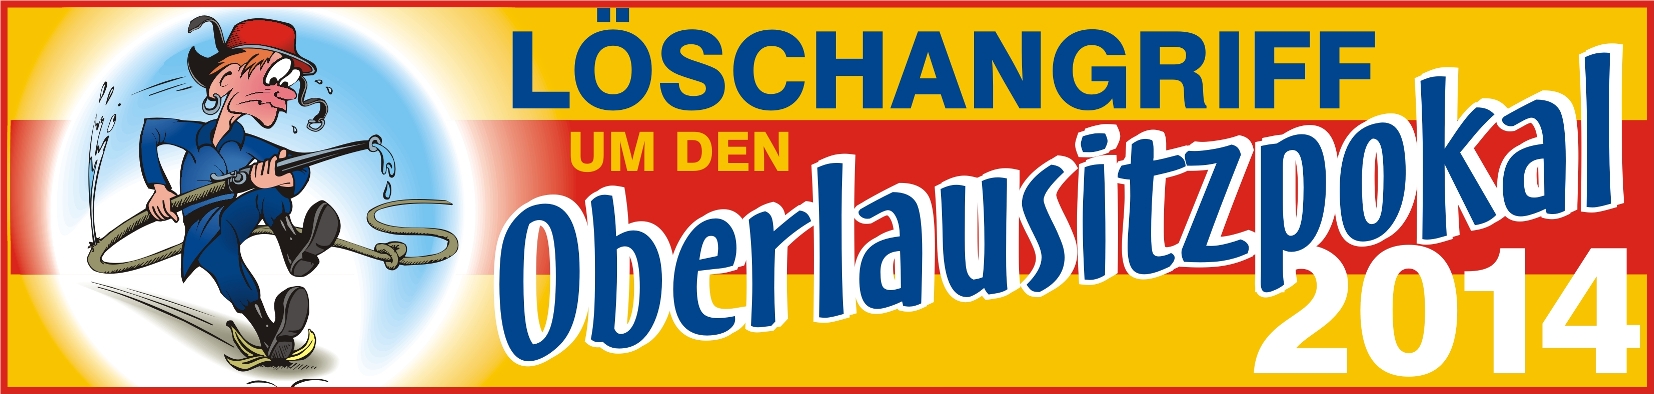 Oberlausitzpokal im Löschangriff 2014